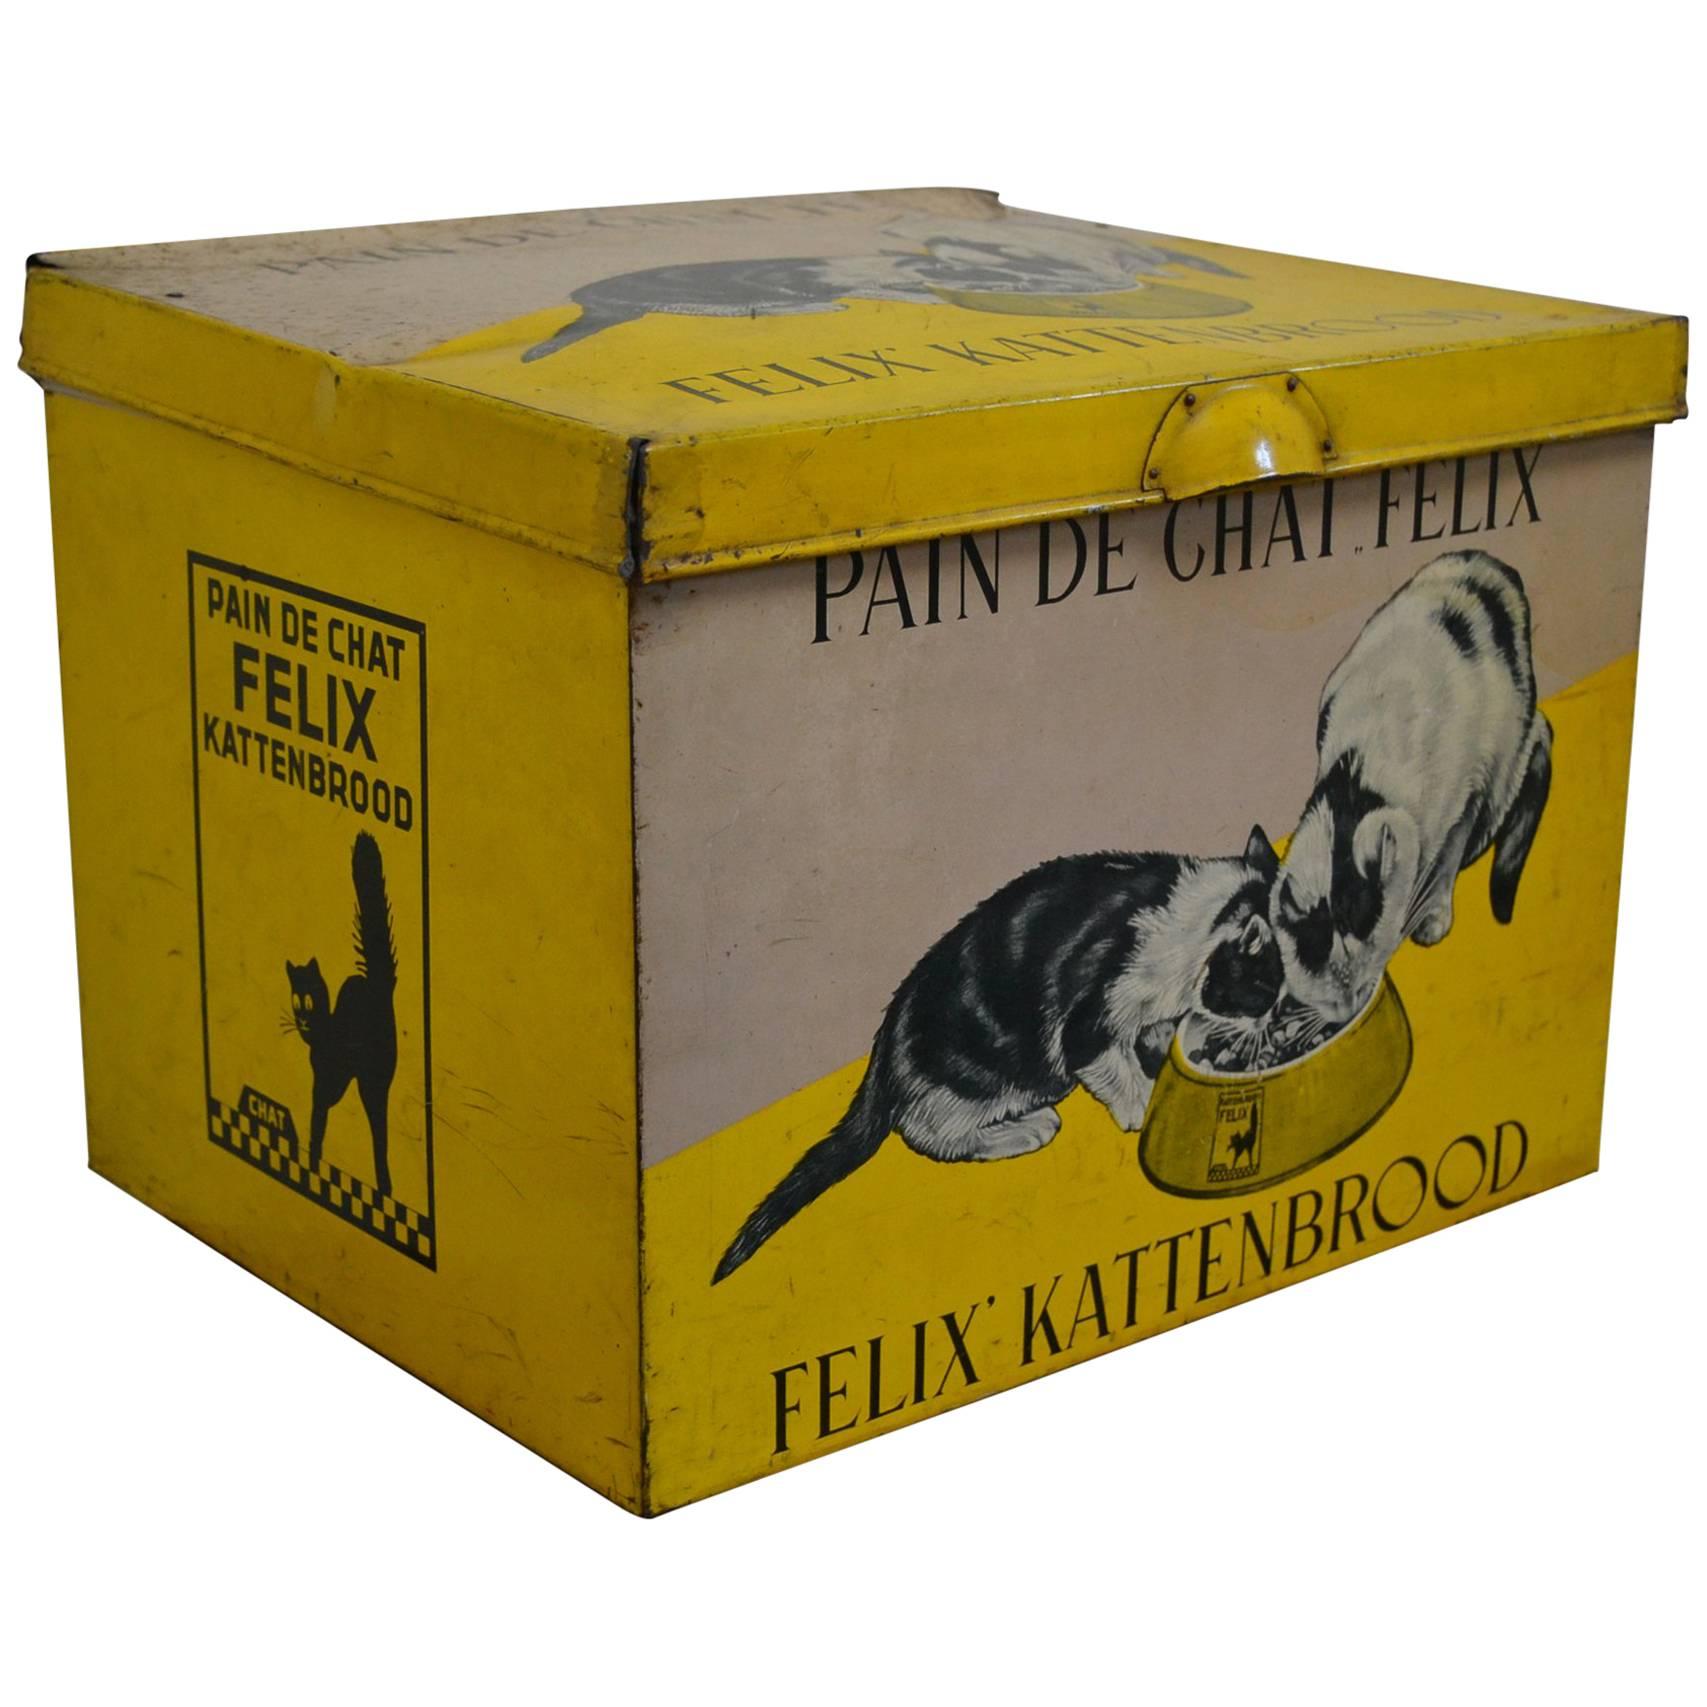 Suberb Tin Box with Felix the Cat